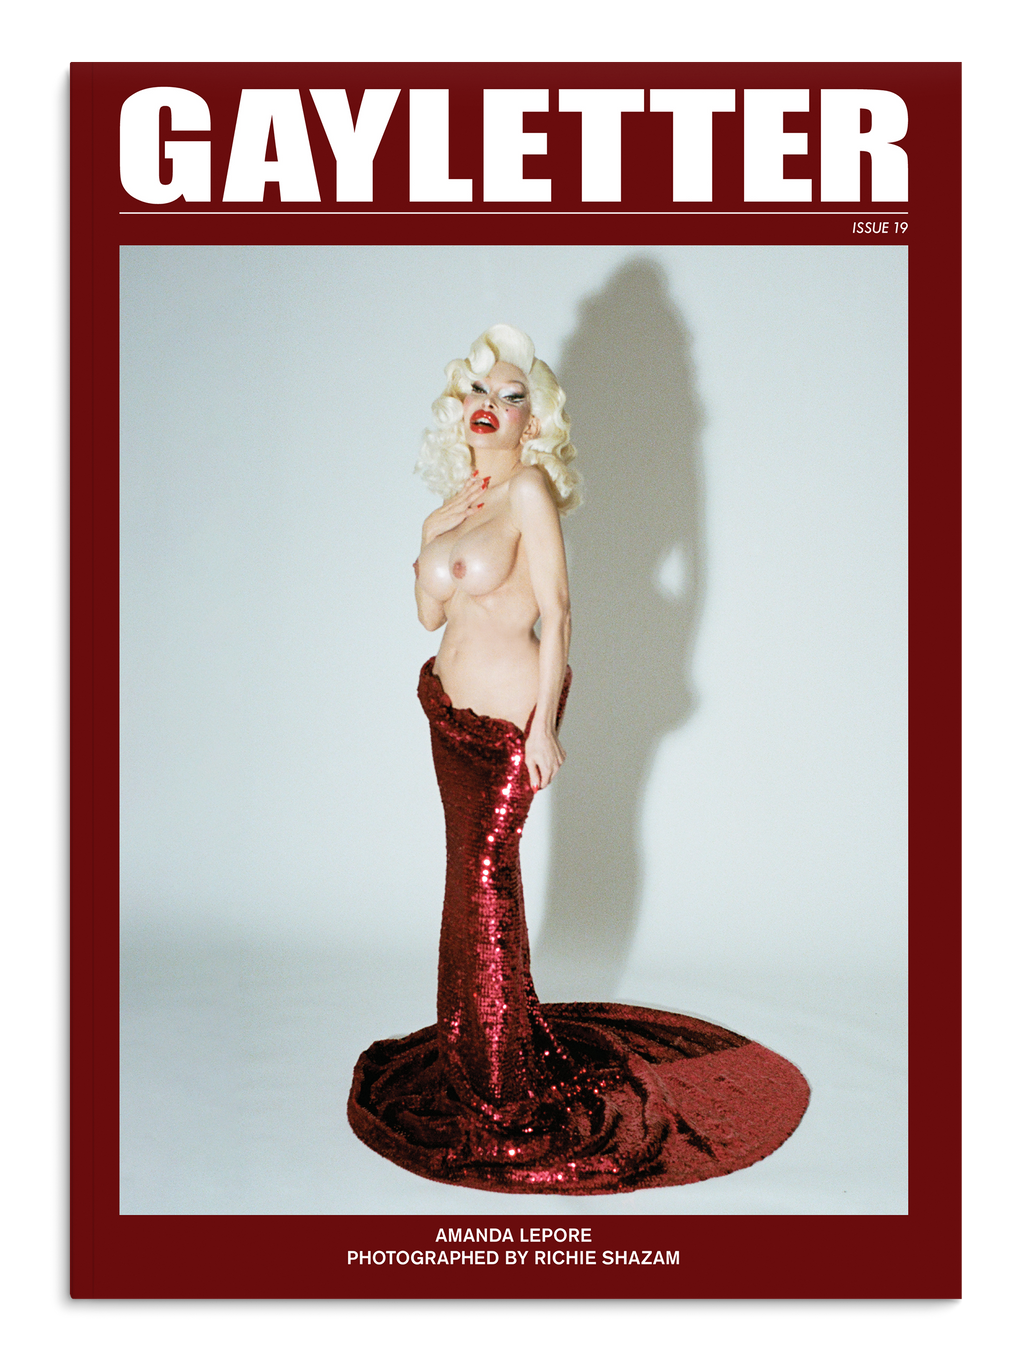 GAYLETTER Issue 19 - Amanda Lepore